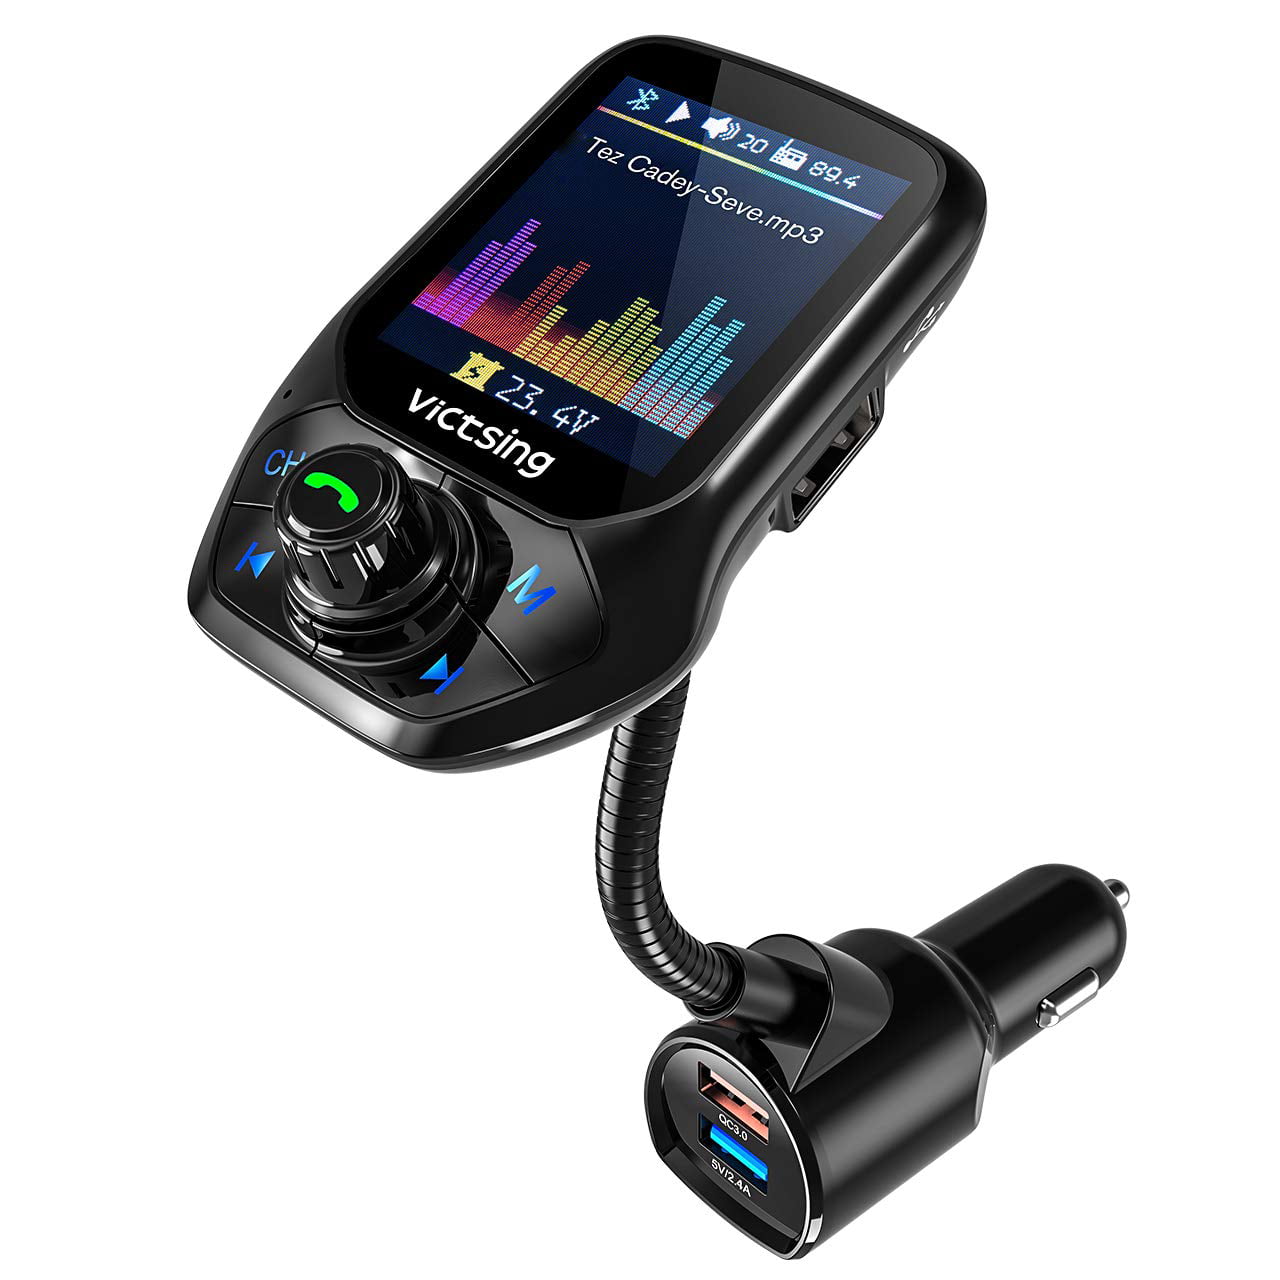 Nulaxy Bluetooth Car FM Transmitter Wireless Audio Adapter Receiver Handsfree Voltmeter Car Kit TF Card AUX USB 1.44 Display On/Off Button EQ Folder Play Mode KM22 Silver 